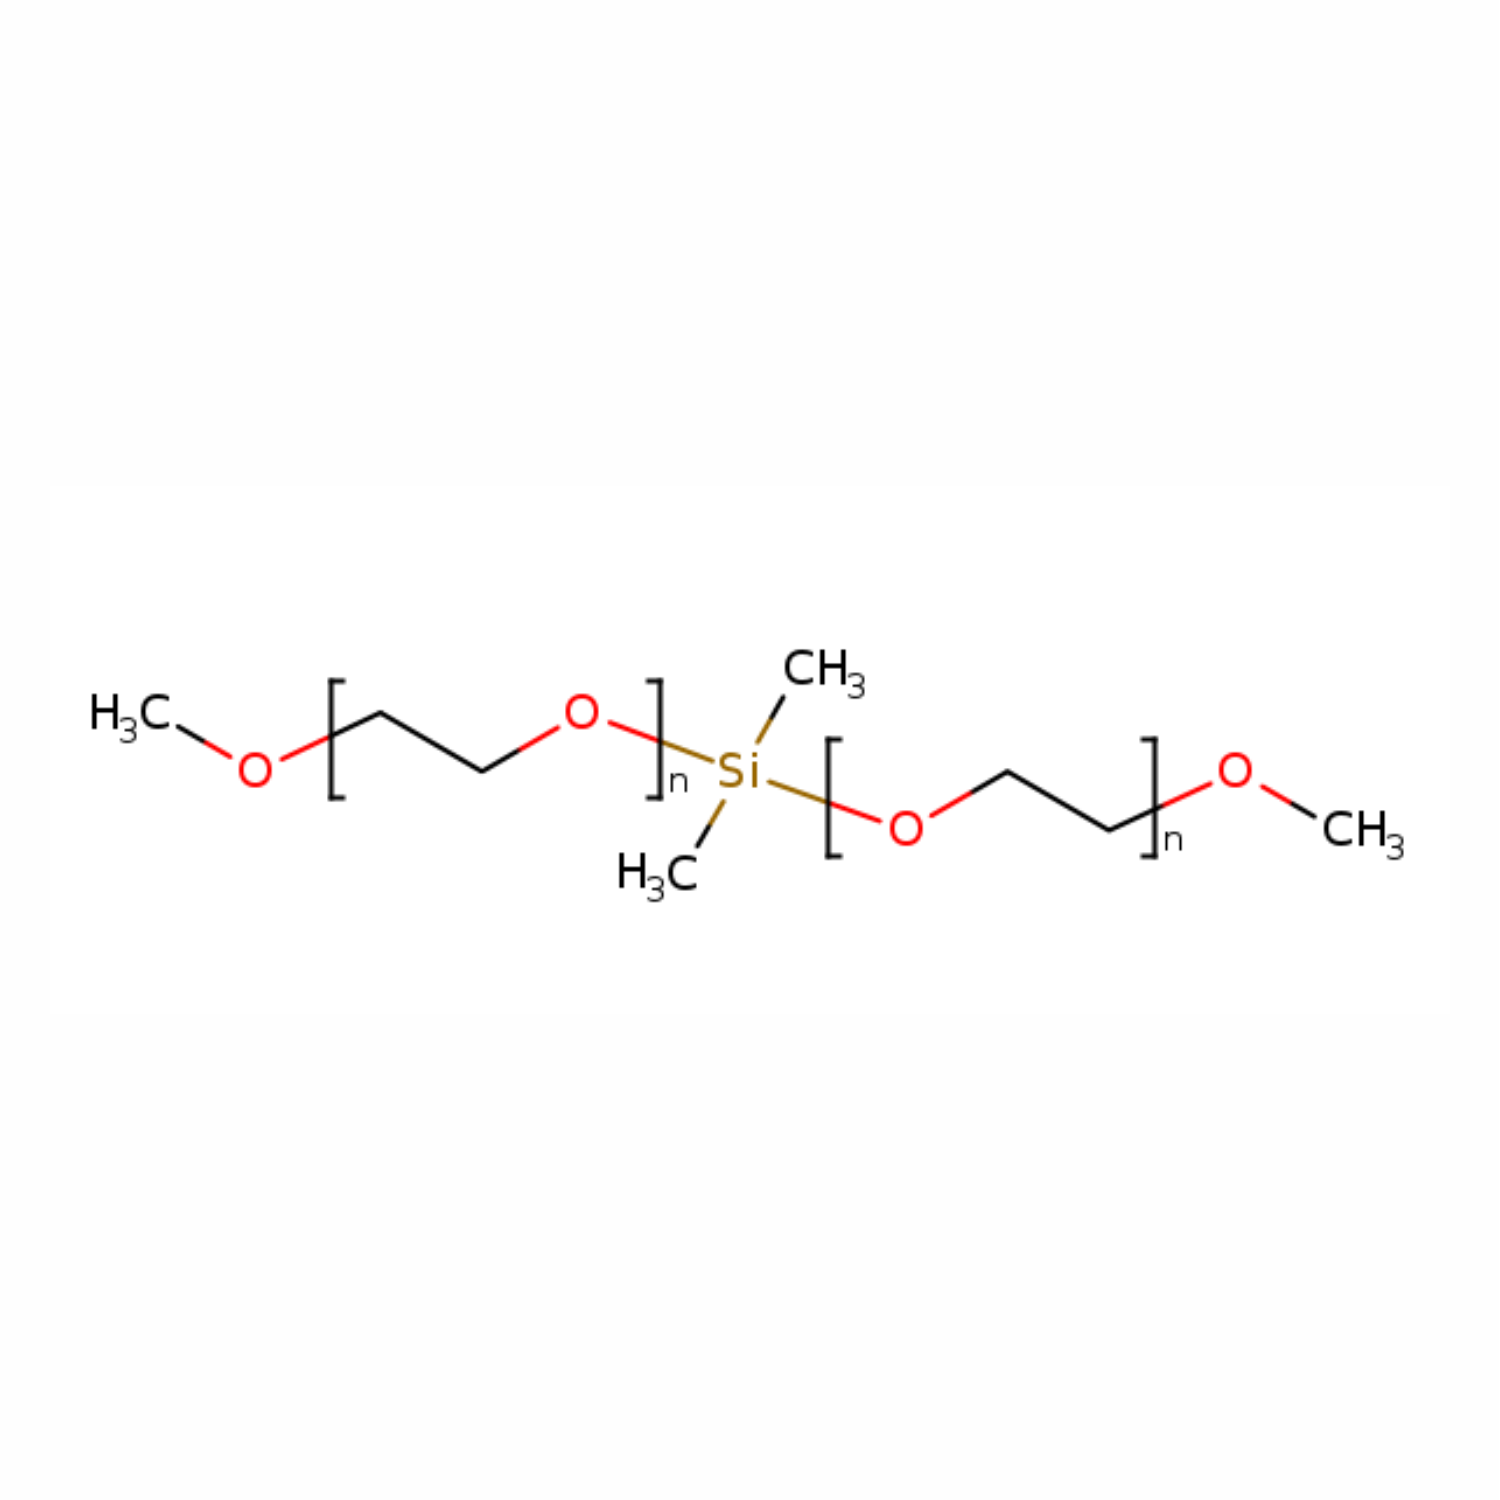 BIS-PEG-18 Methyl Ether Dimethyl Silane